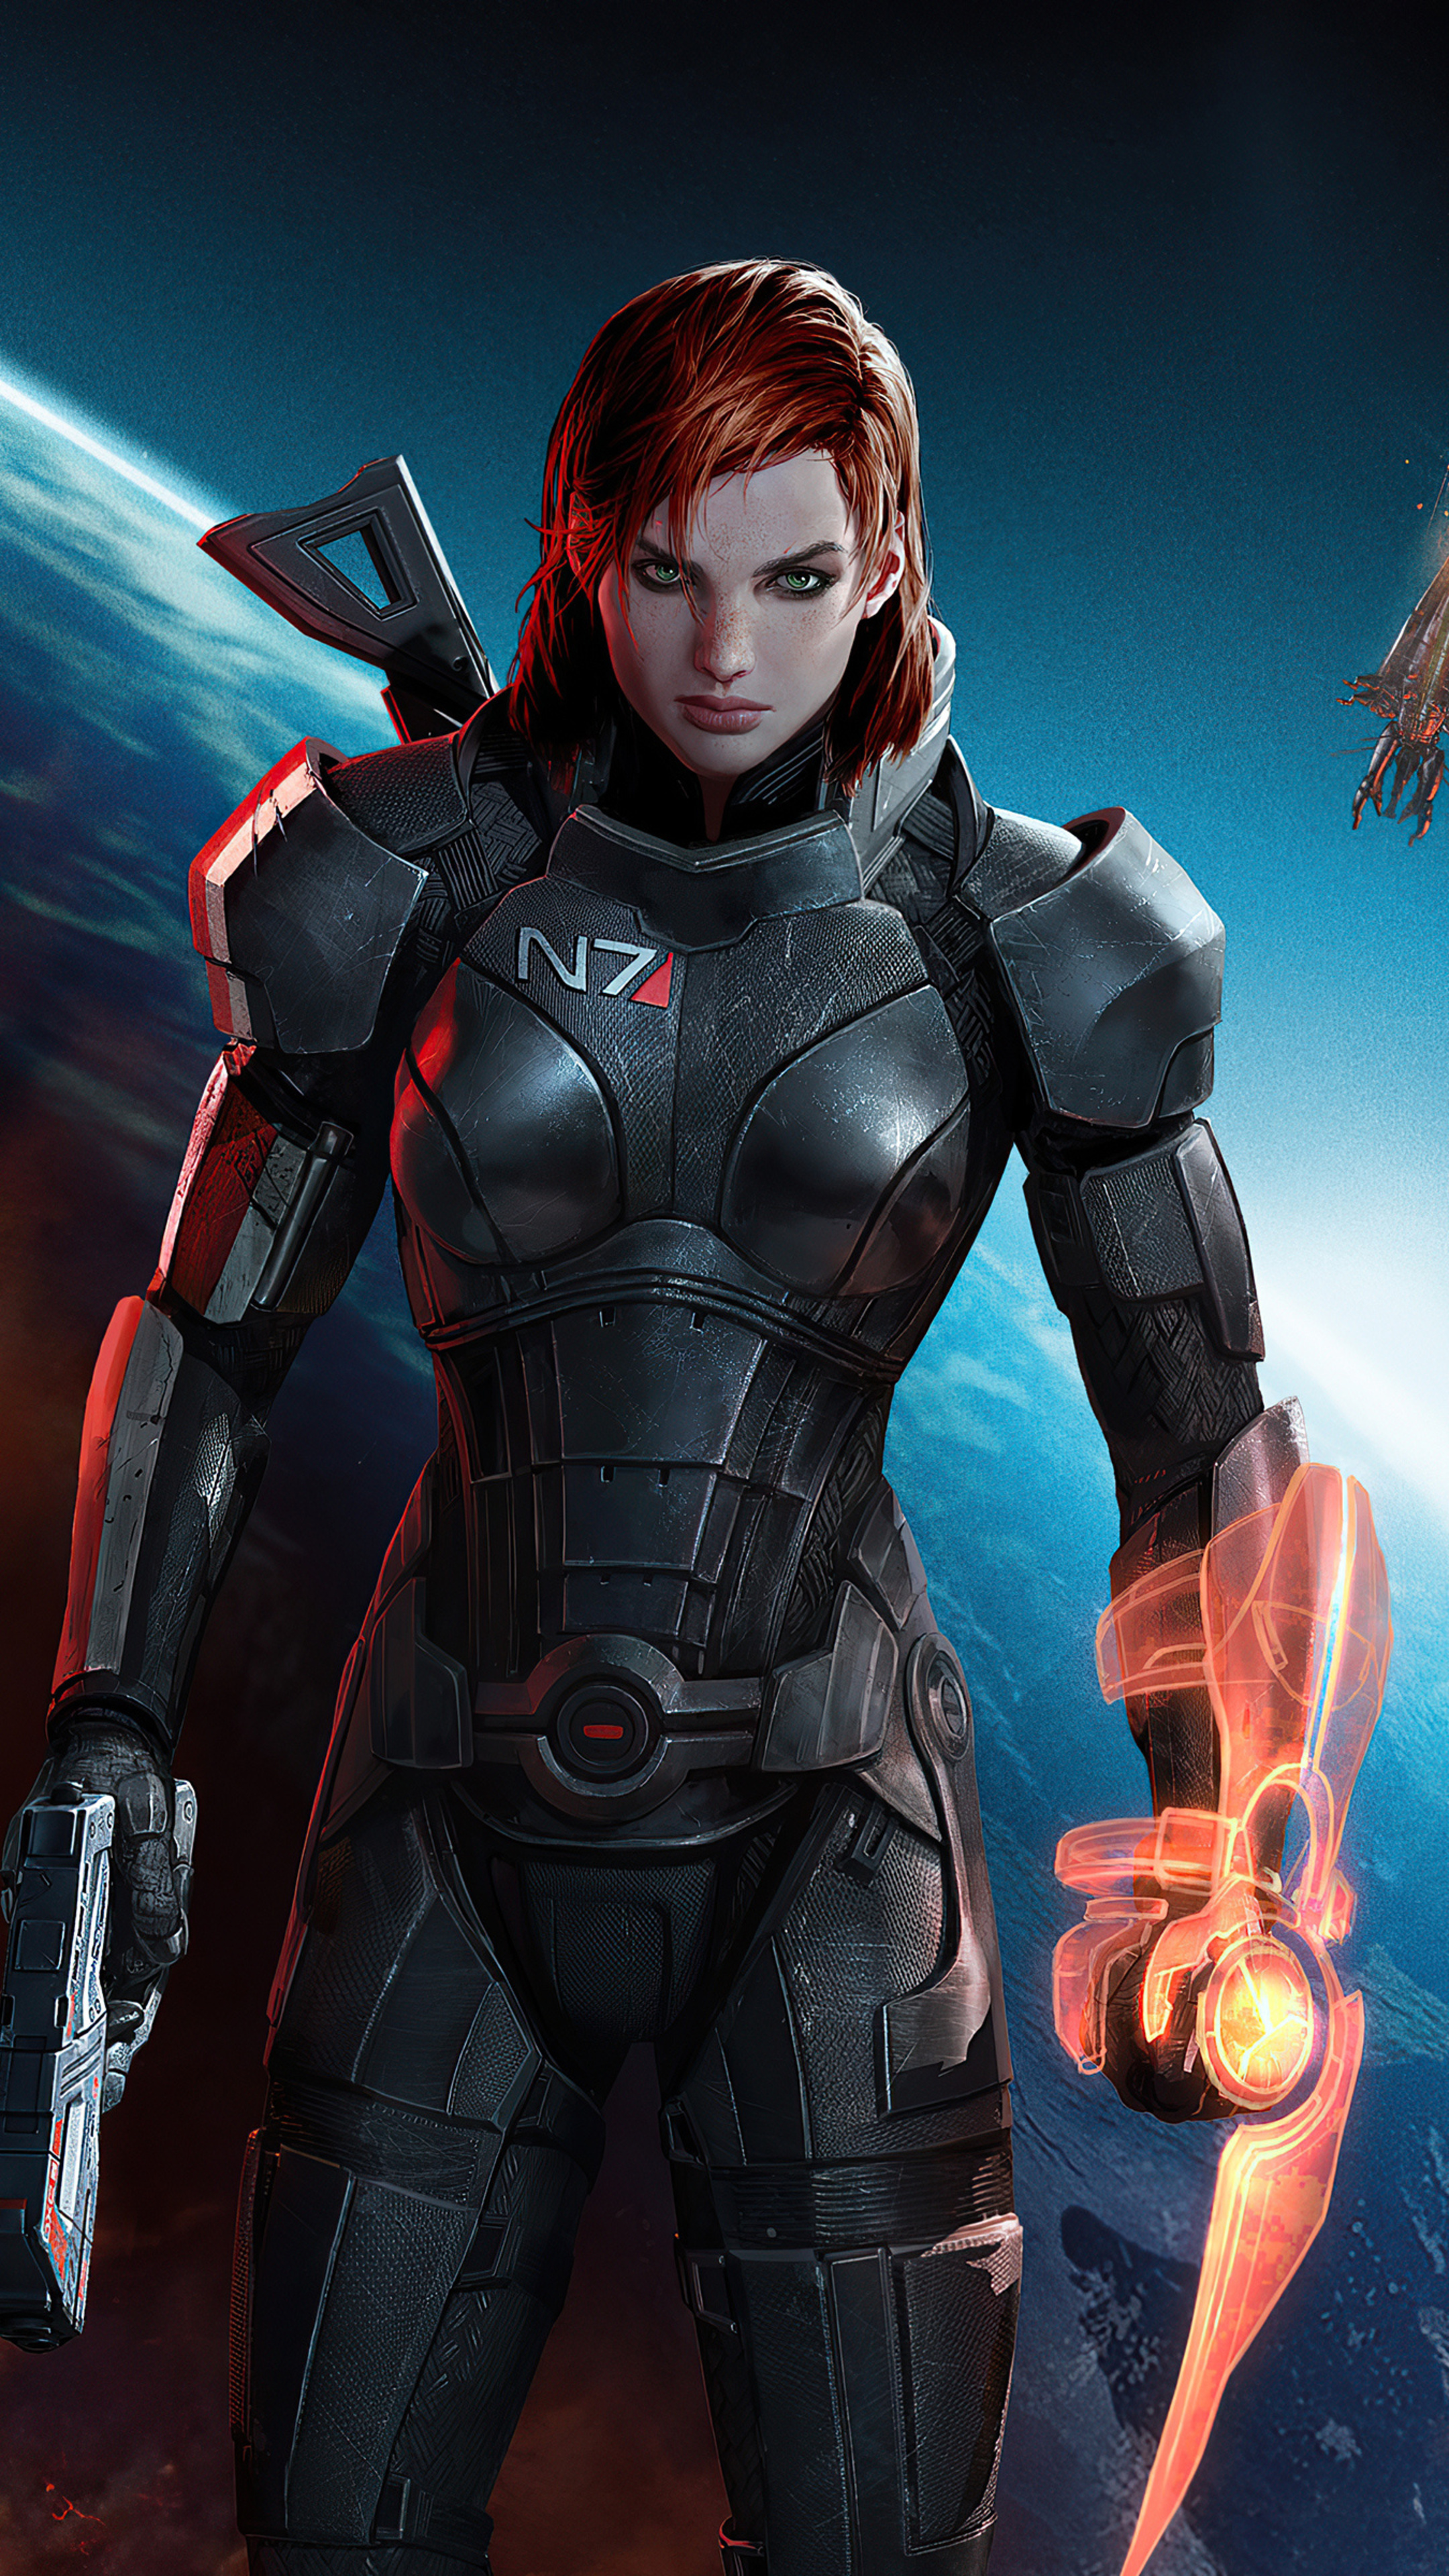 Mass Effect 3, Commander Shepard, 4K wallpapers, Immersive gaming experience, 2160x3840 4K Handy